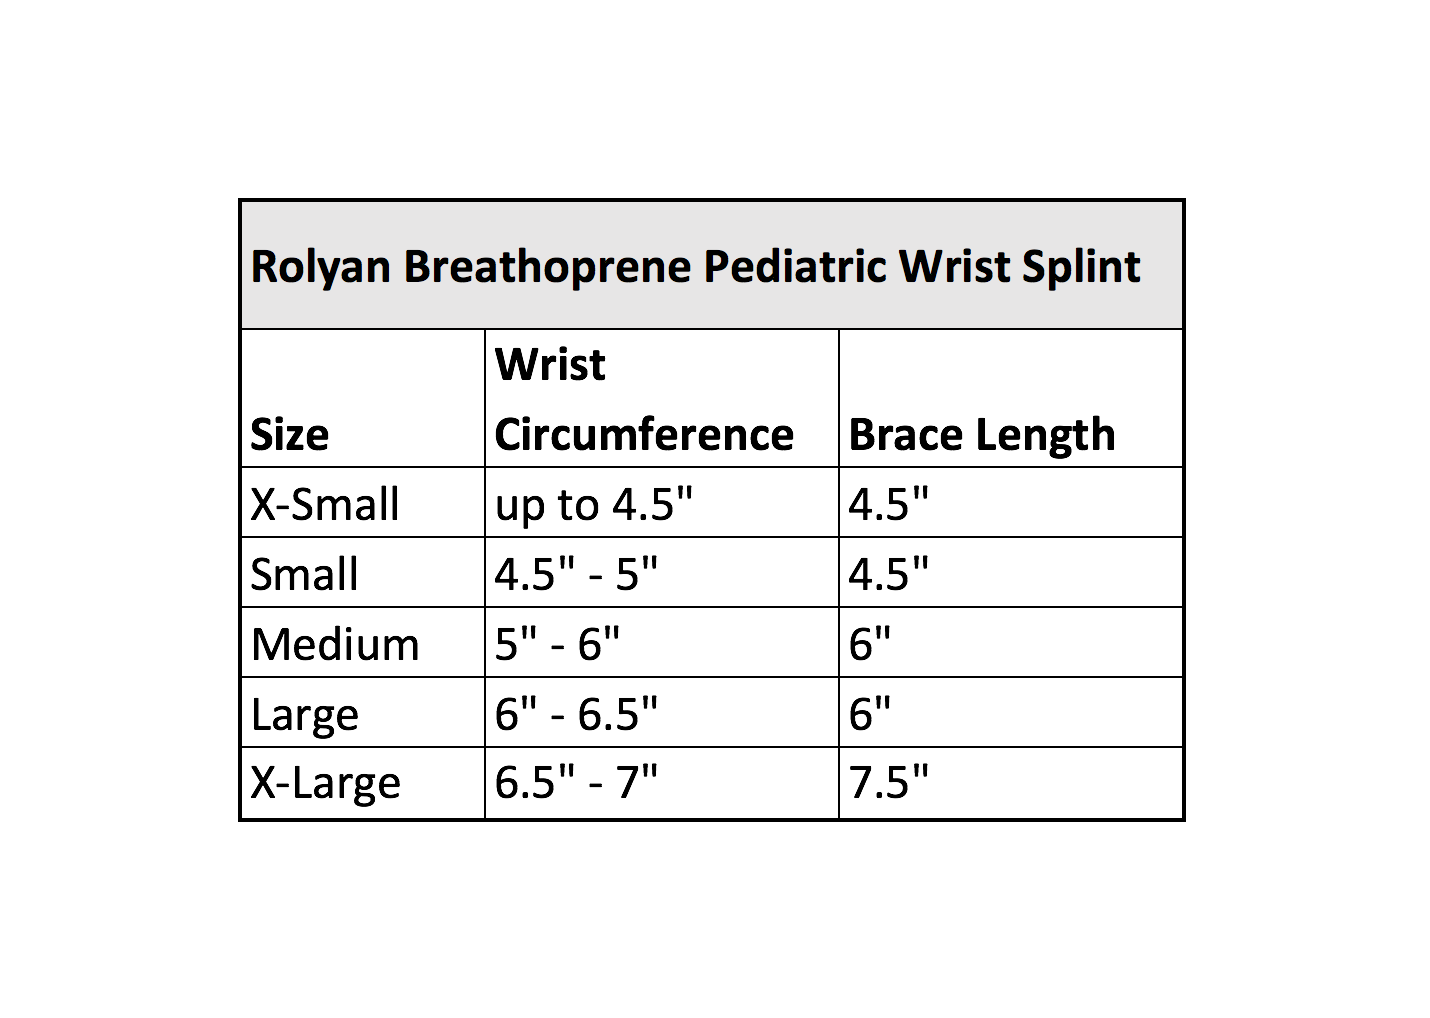 Rolyan Breathoprene Pediatric Wrist Splint